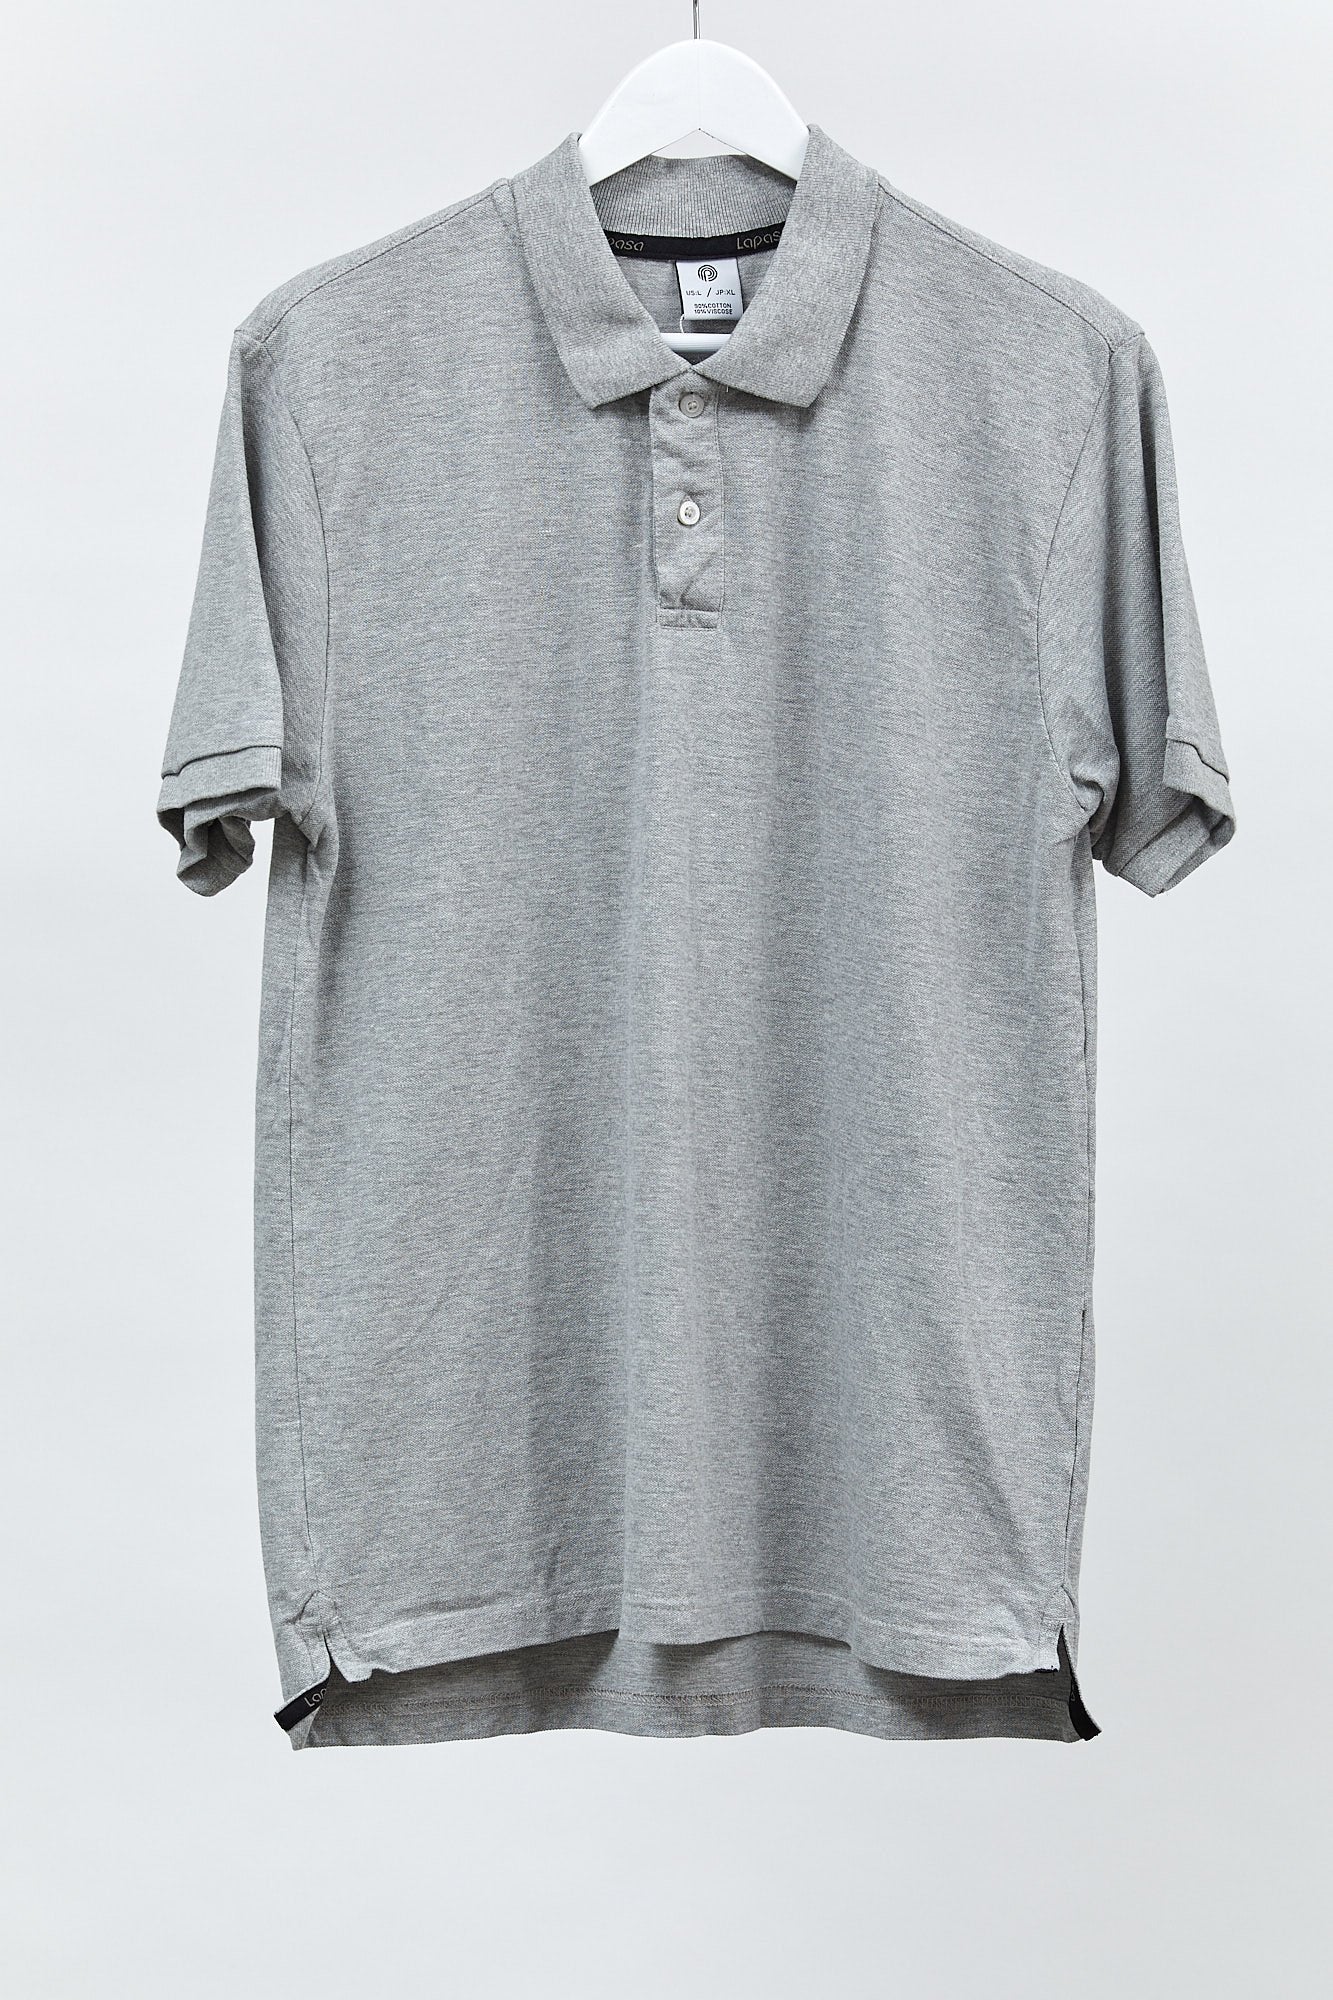 Mens Grey Polo Shirt: Size Large